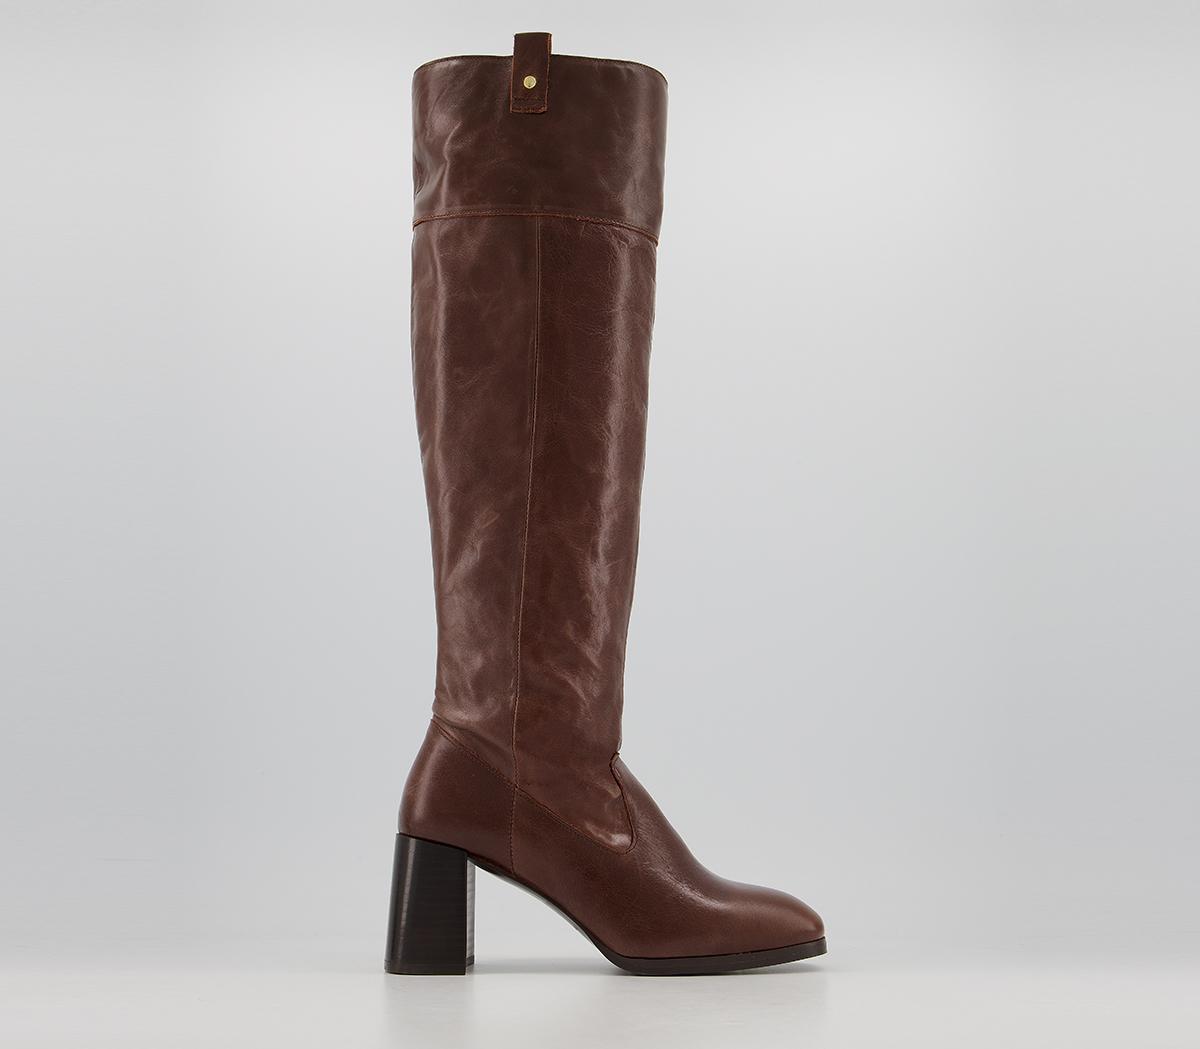 OFFICEKacey Platform Knee BootsChocolate Leather